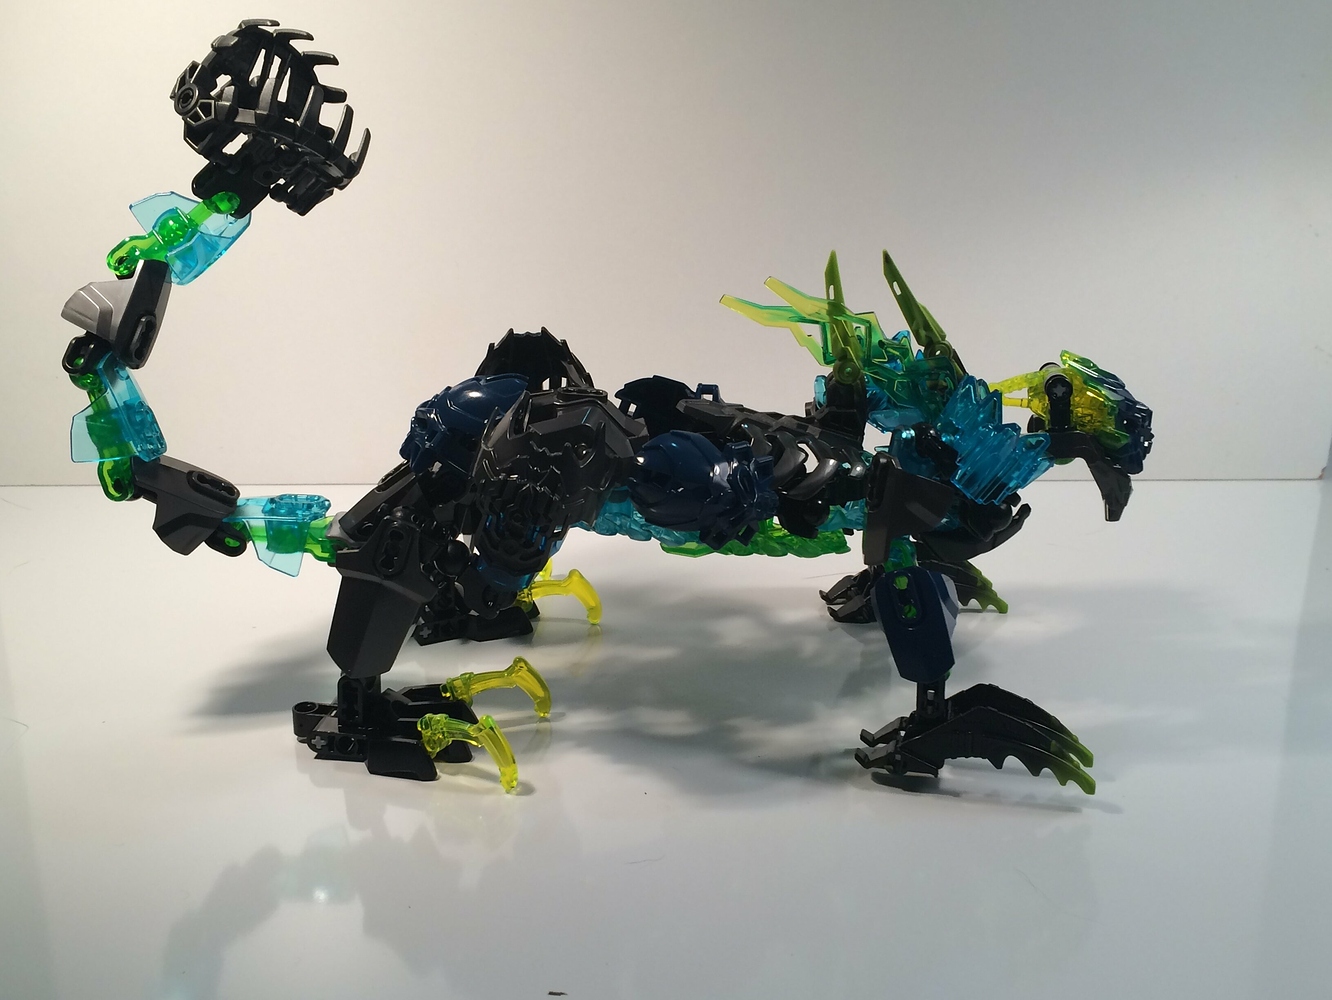 LEGO Bionicle Monster moc